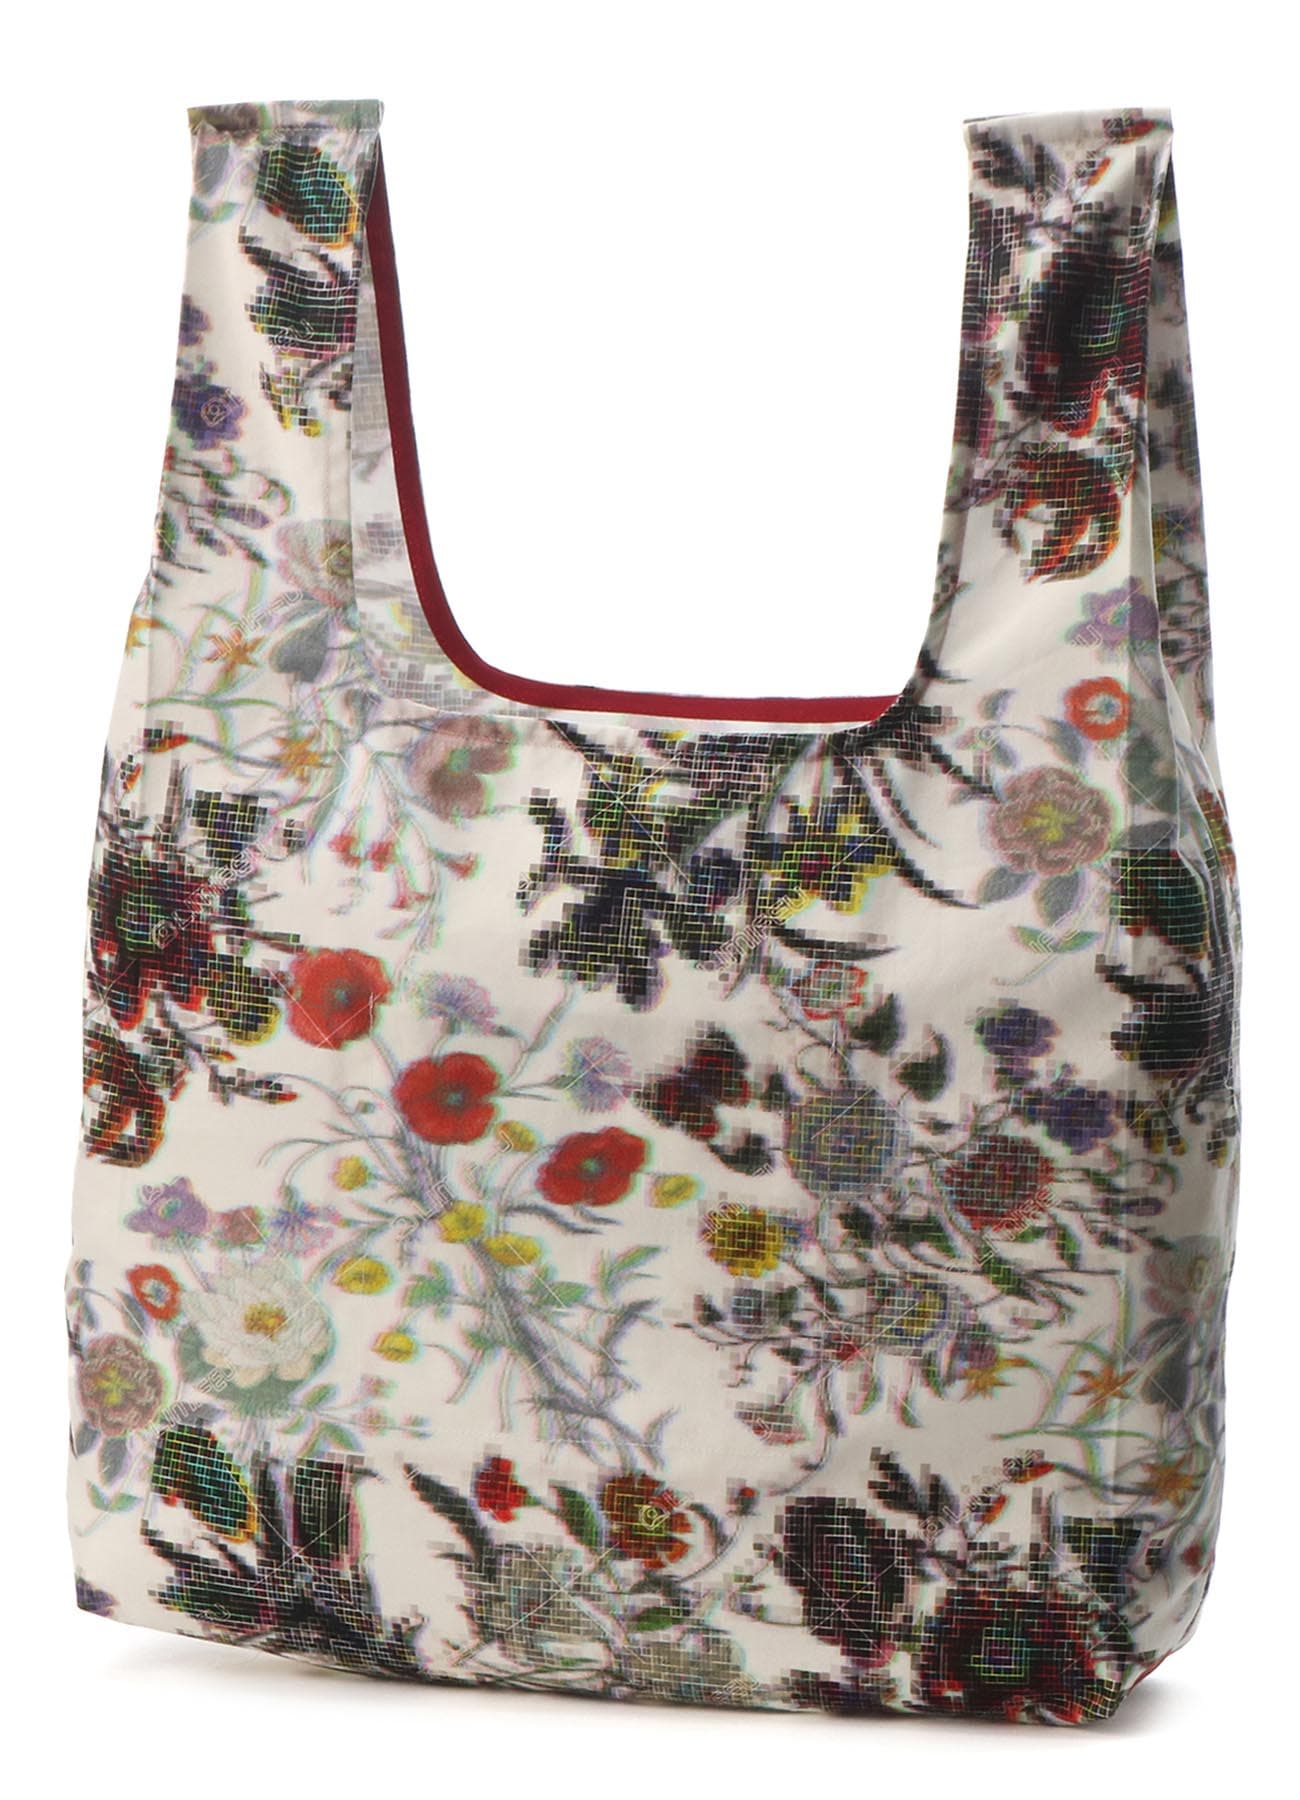 Mosaic Flower Print Cotton Shopping Bag